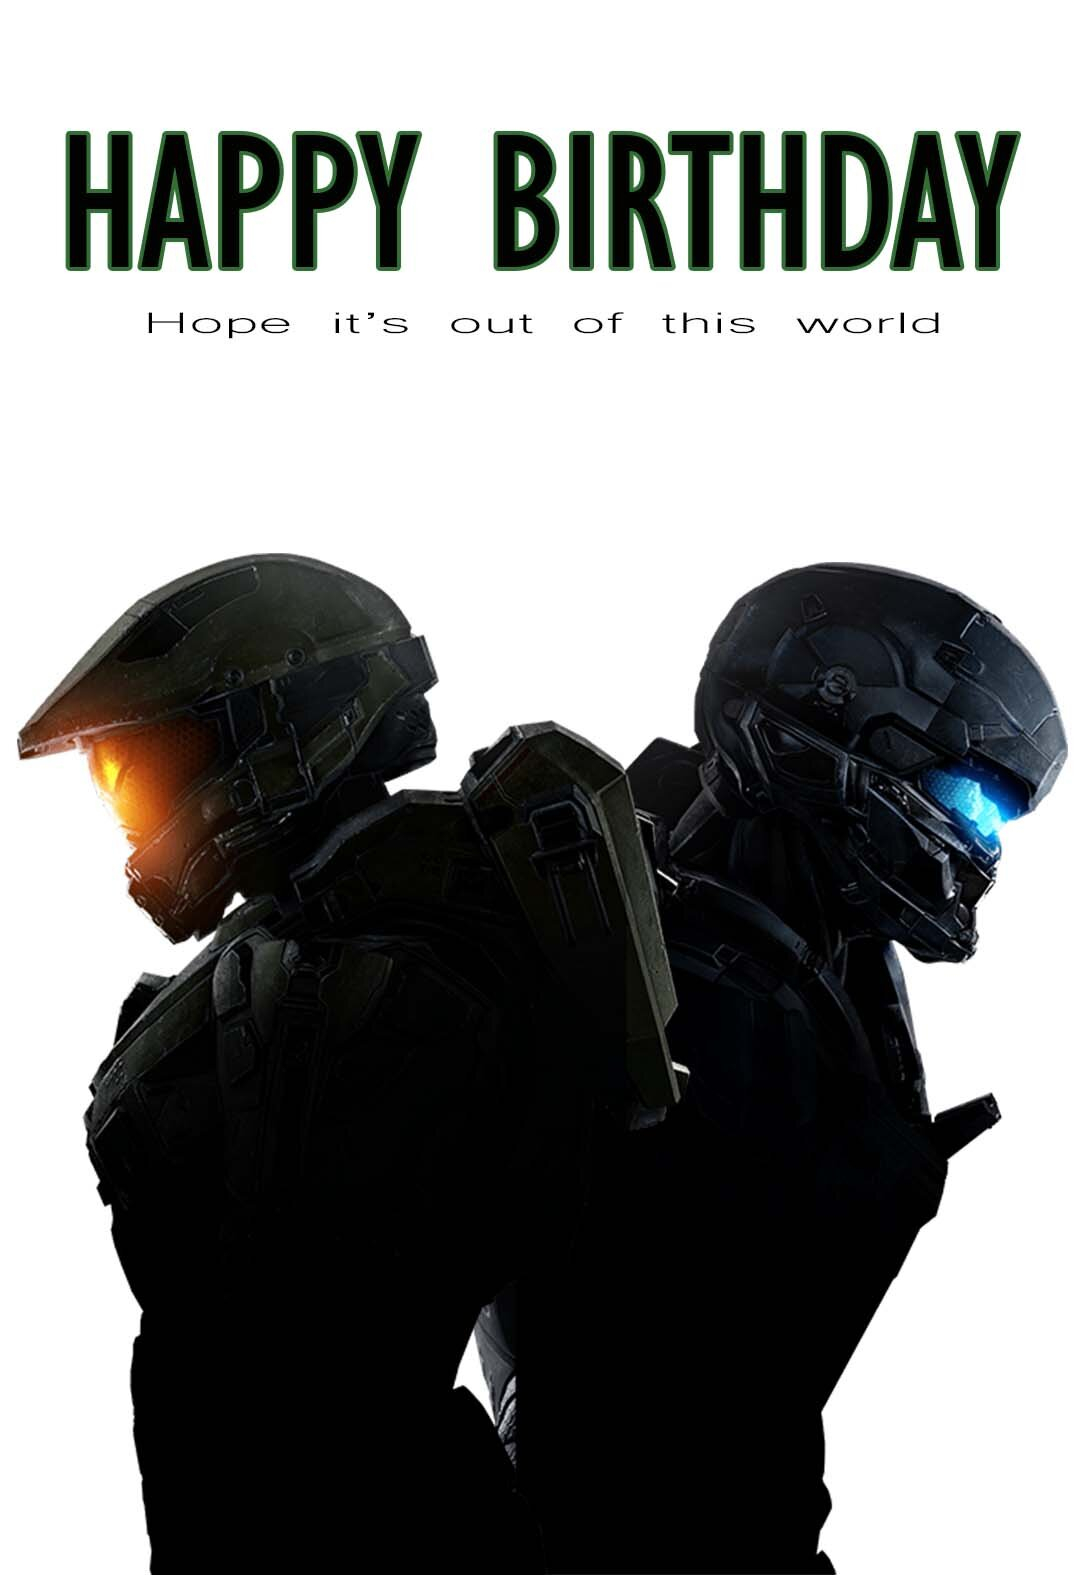 4 Awesome Halo Printable Birthday Cards free PRINTBIRTHDAY CARDS